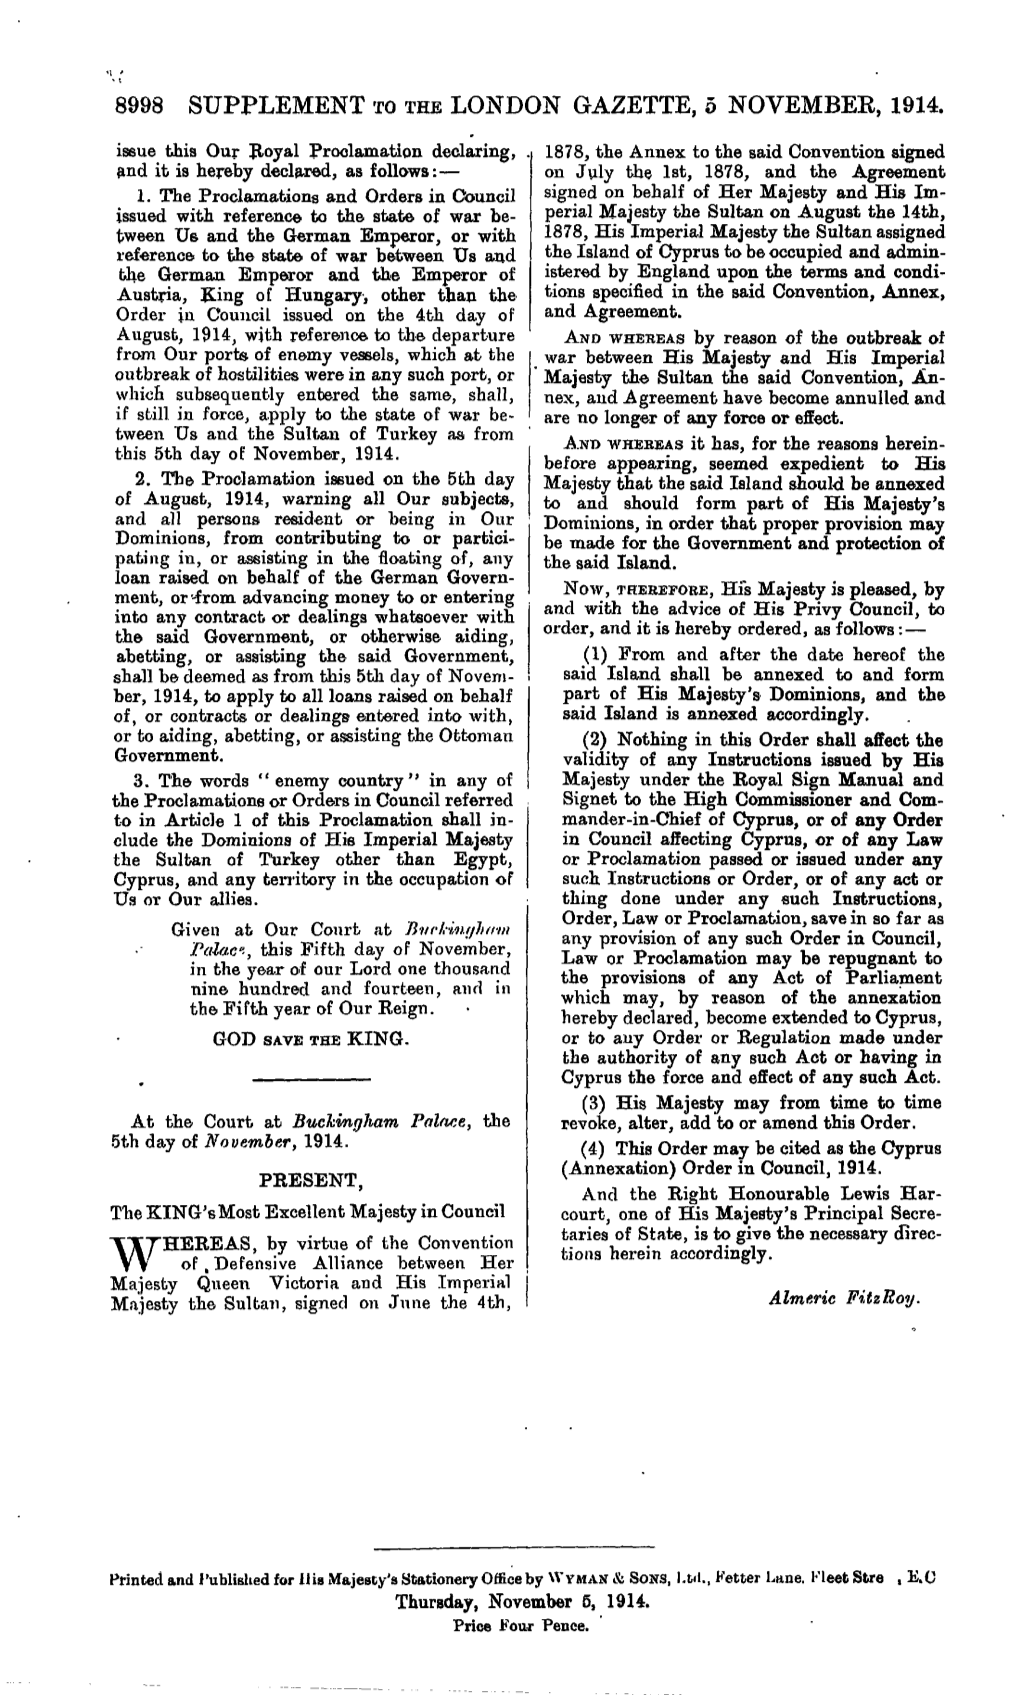 8998 Supplement to the London Gazette, 5 November, 1914